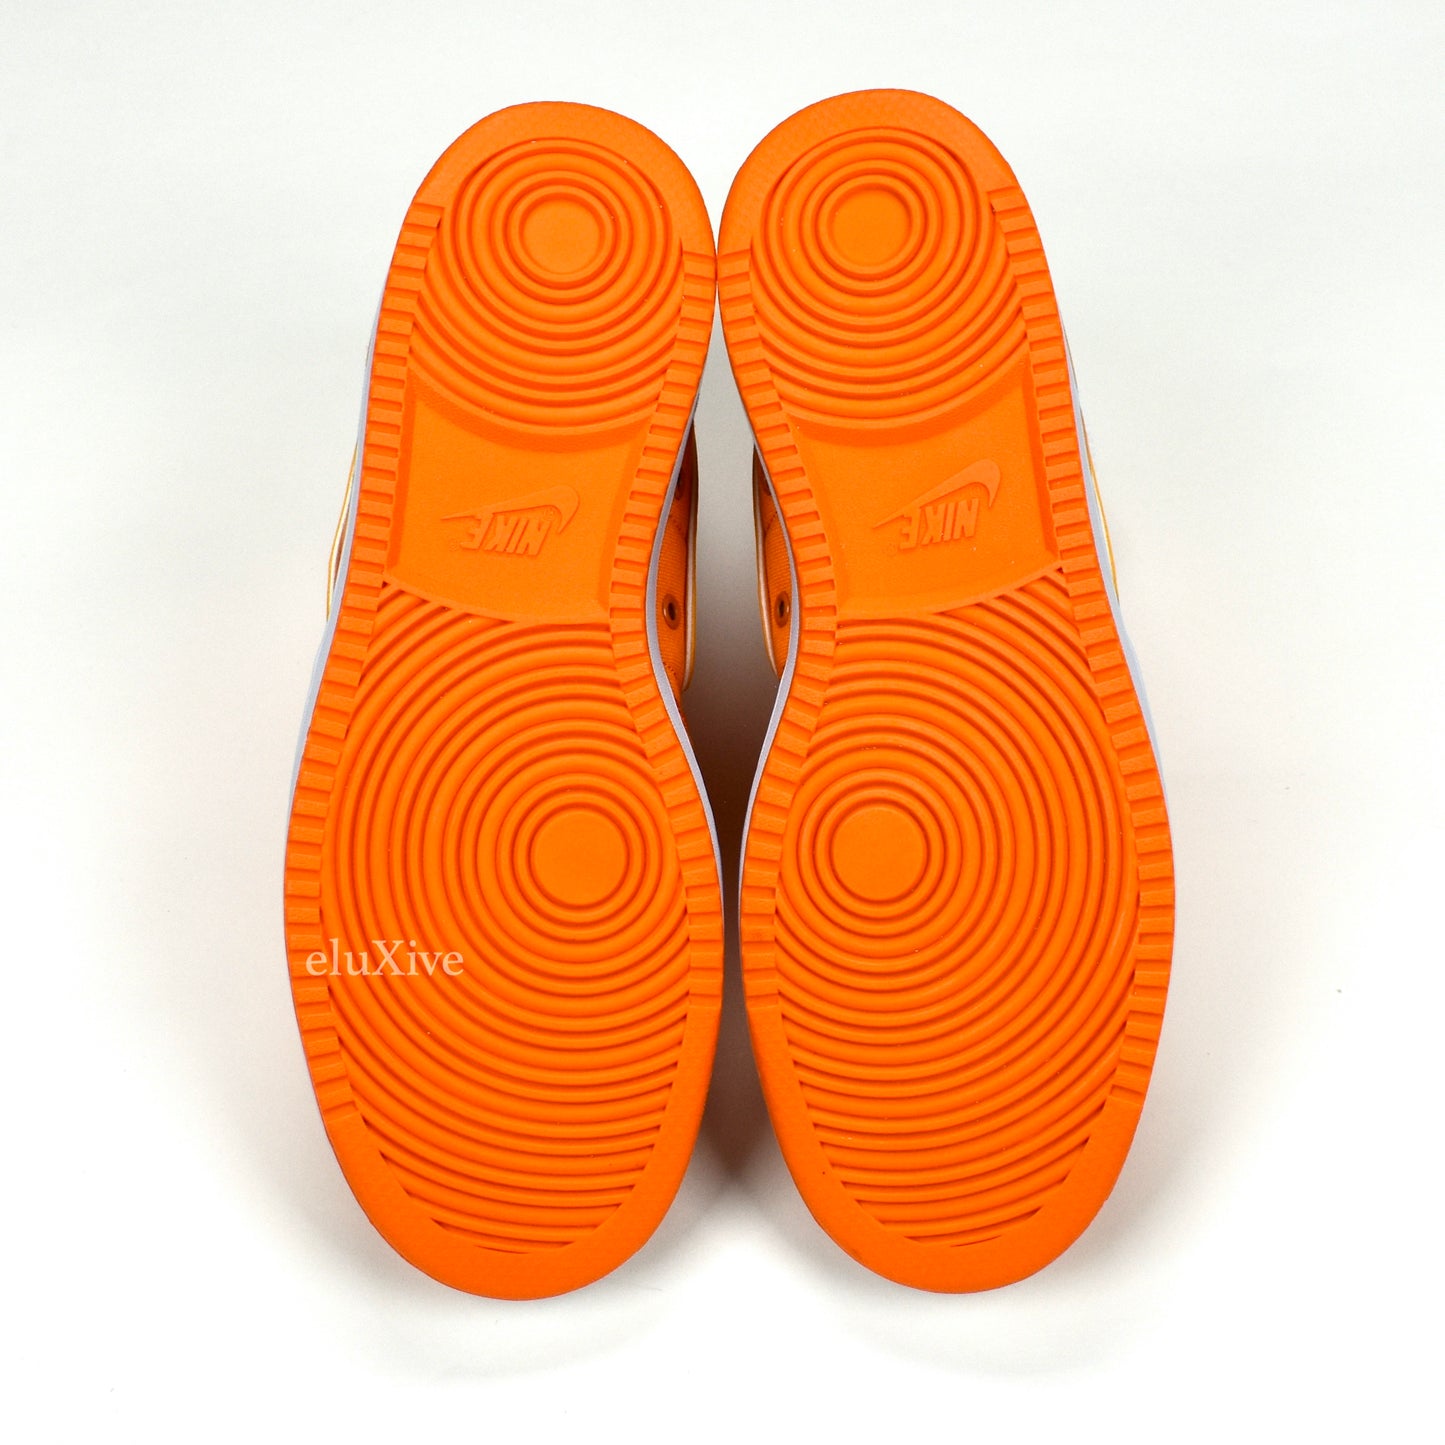 Nike - Vandal High Supreme OG 'Doc Brown' (Orange/White)